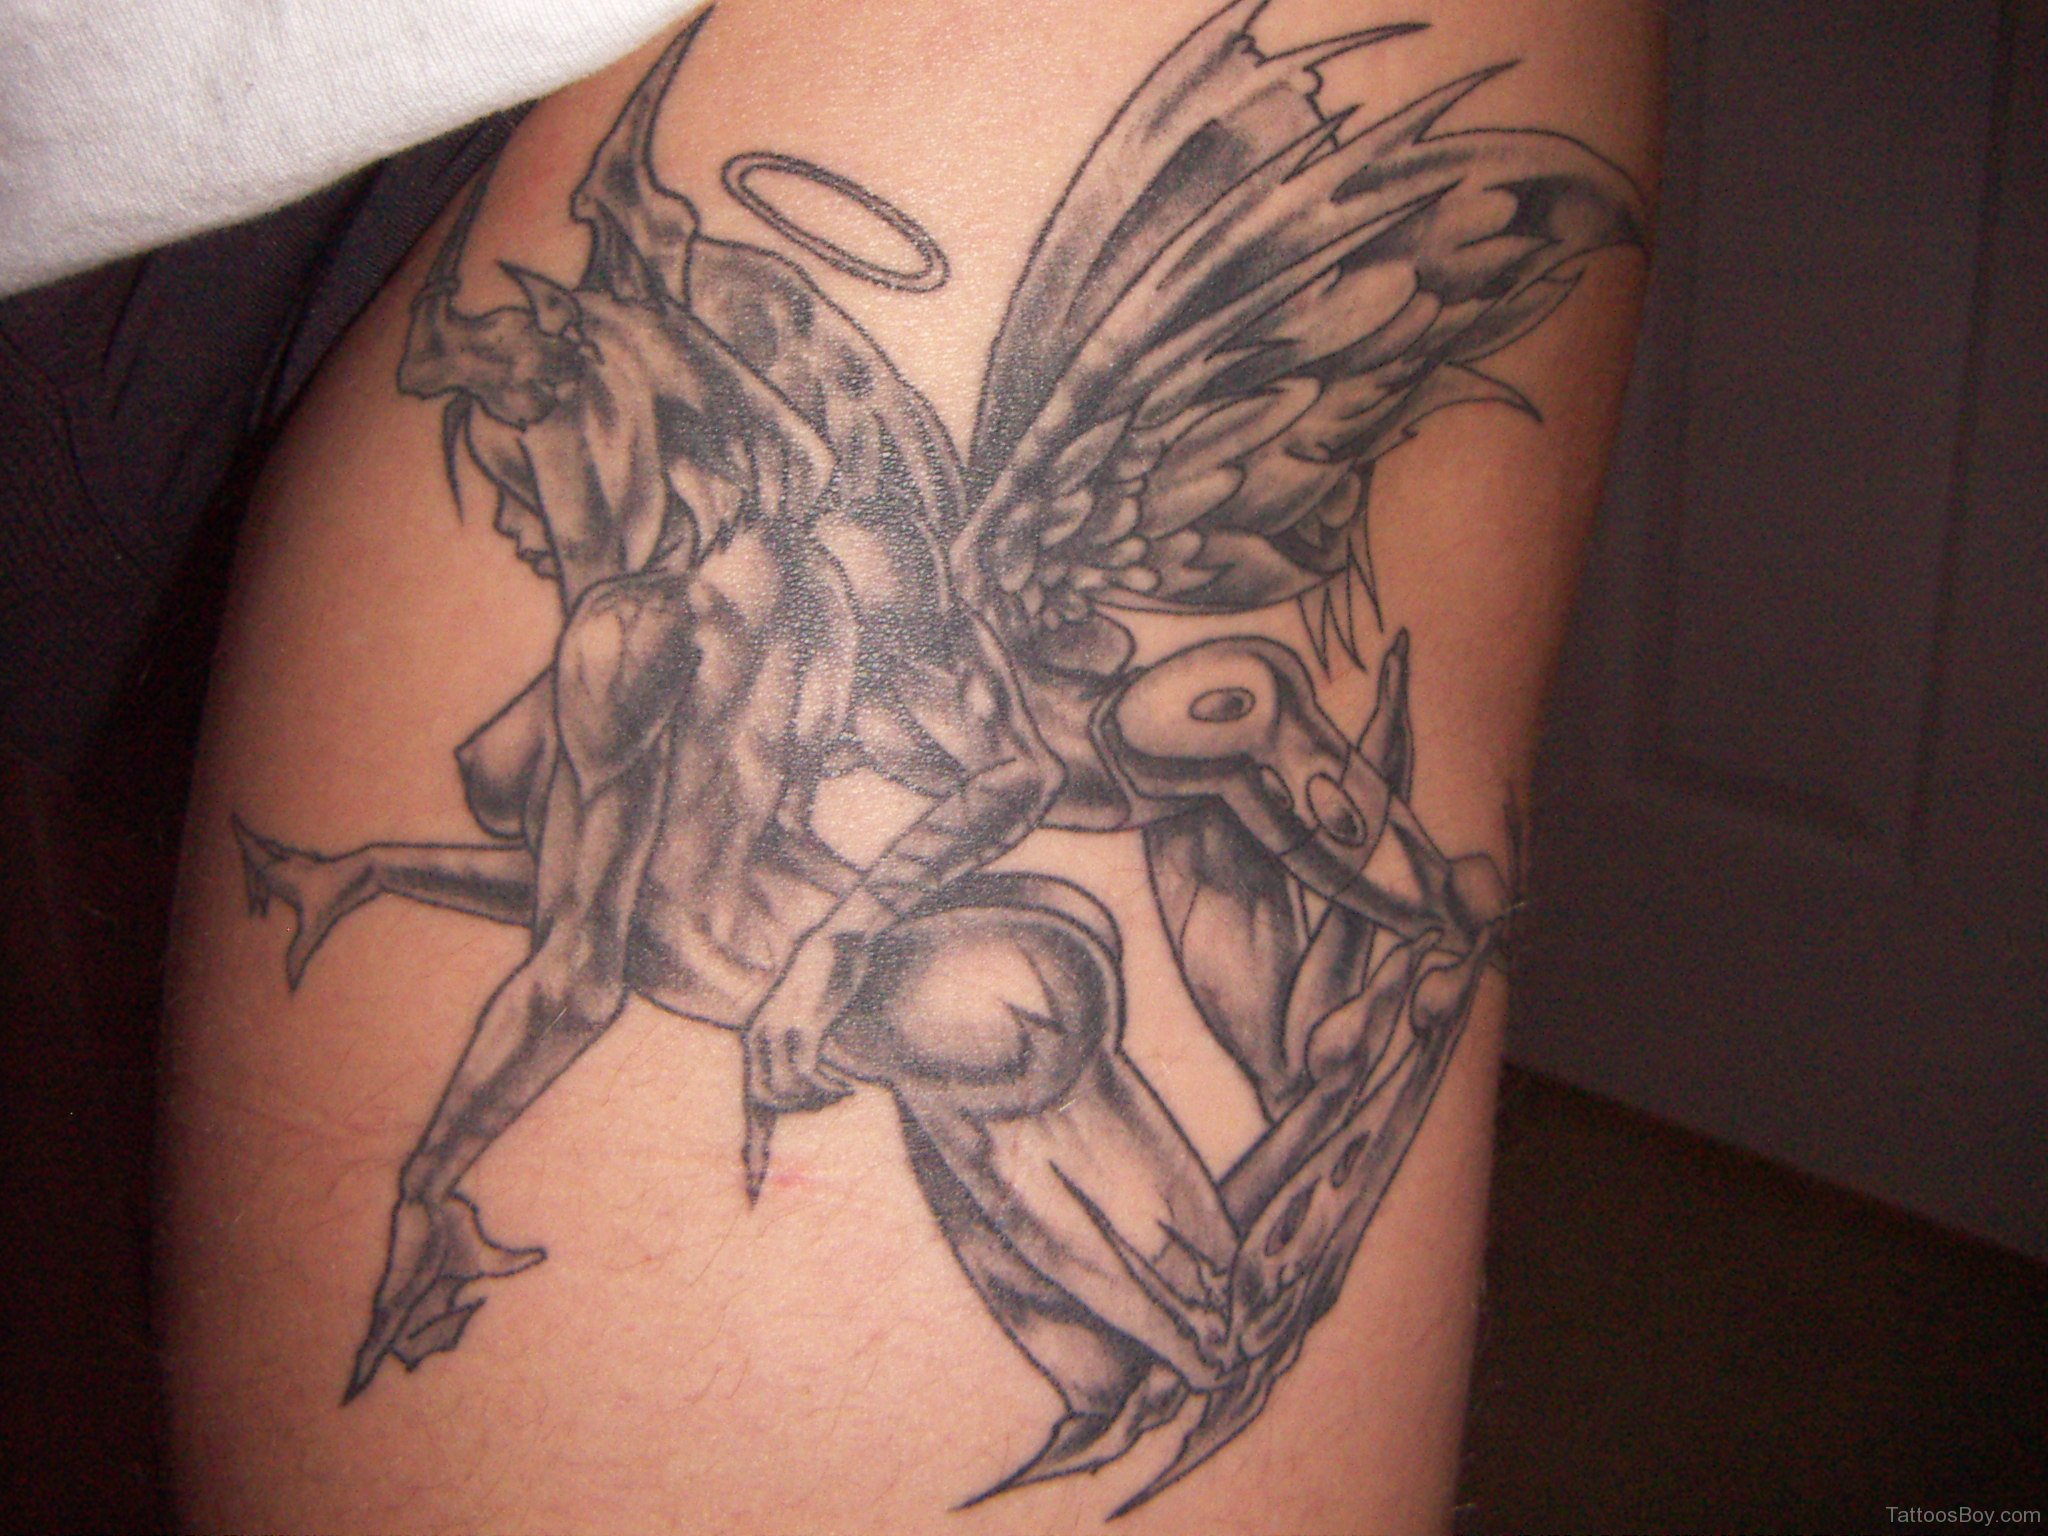 29 Best Creative And Unusual Demon Tattoo Designs